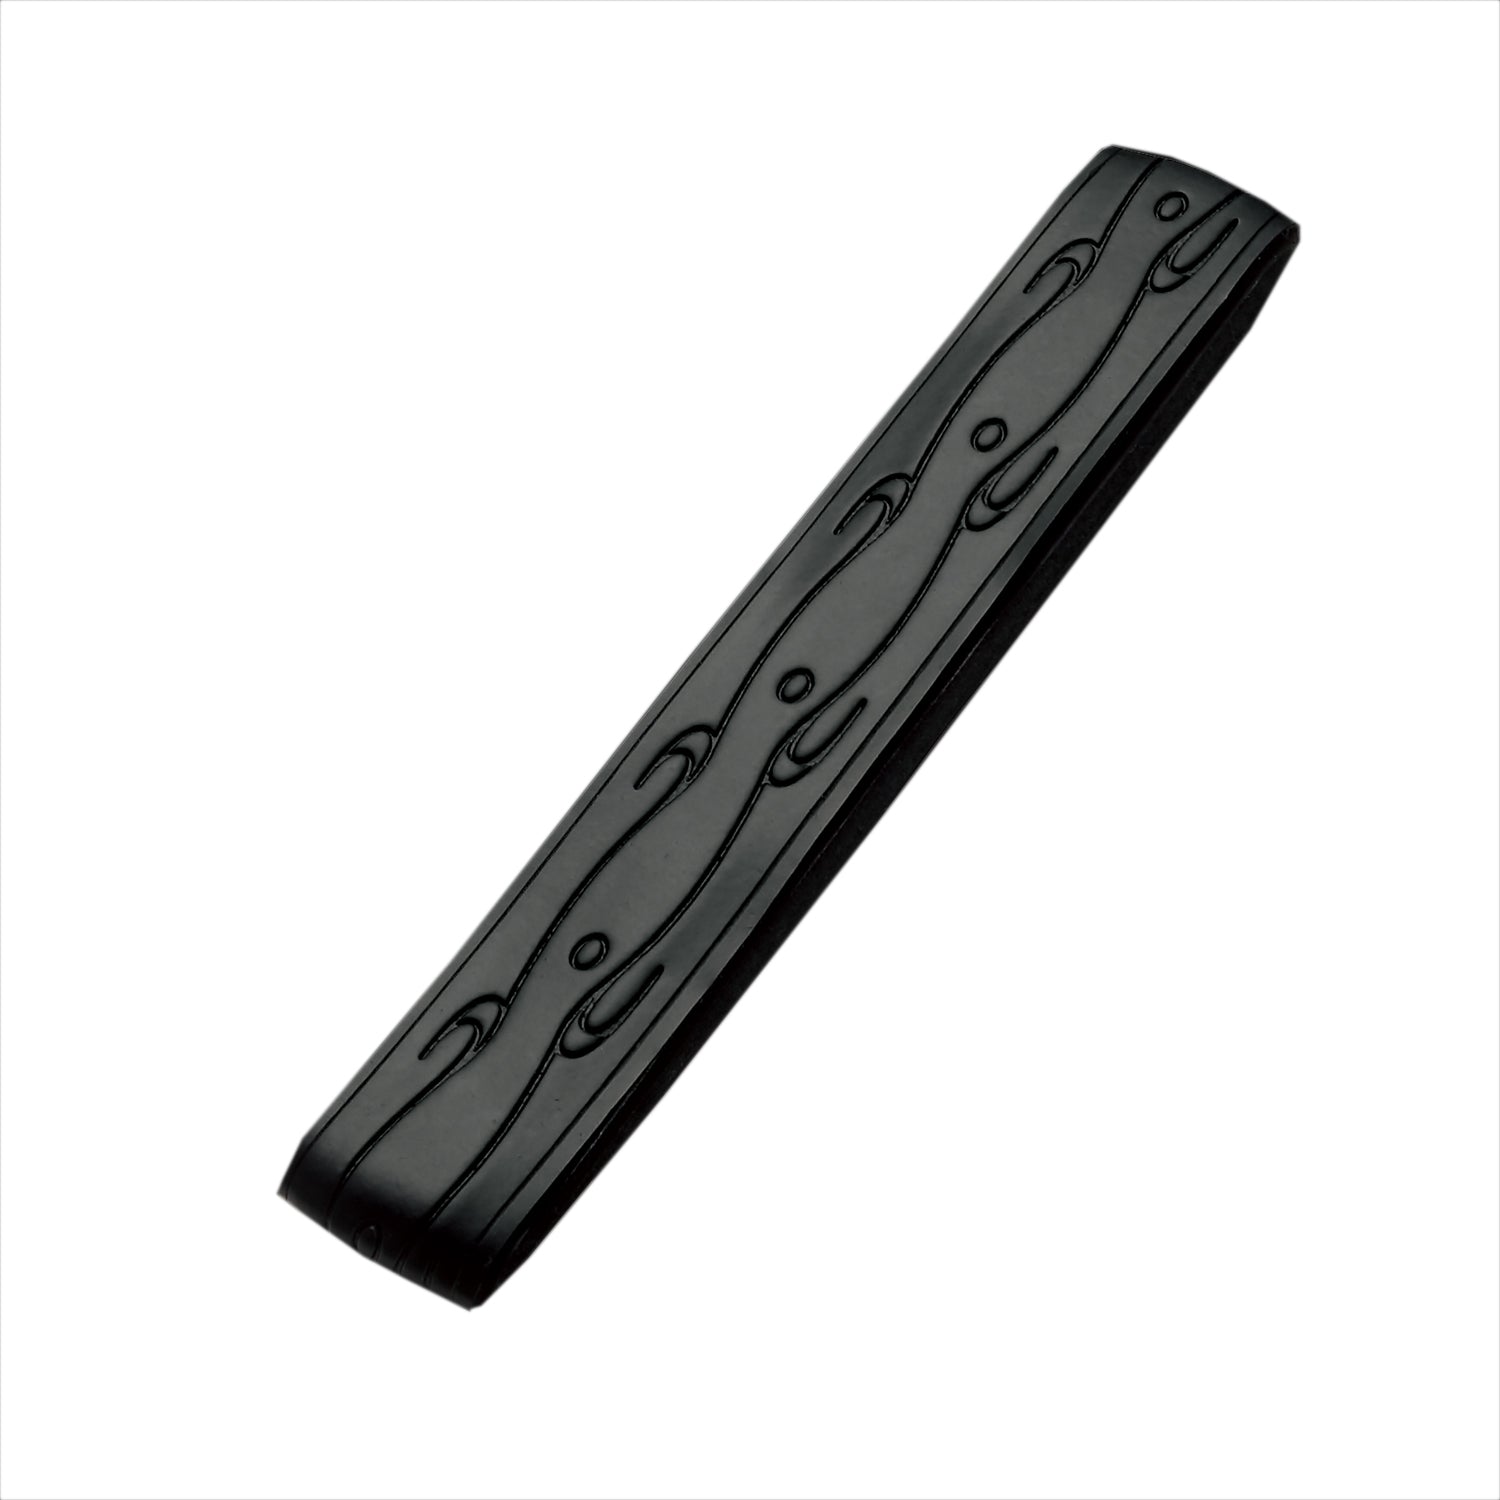 Yonex AC224EX Premium Grip Comfort Type Tennis Tapes, Black (1 Grip) - Best Price online Prokicksports.com